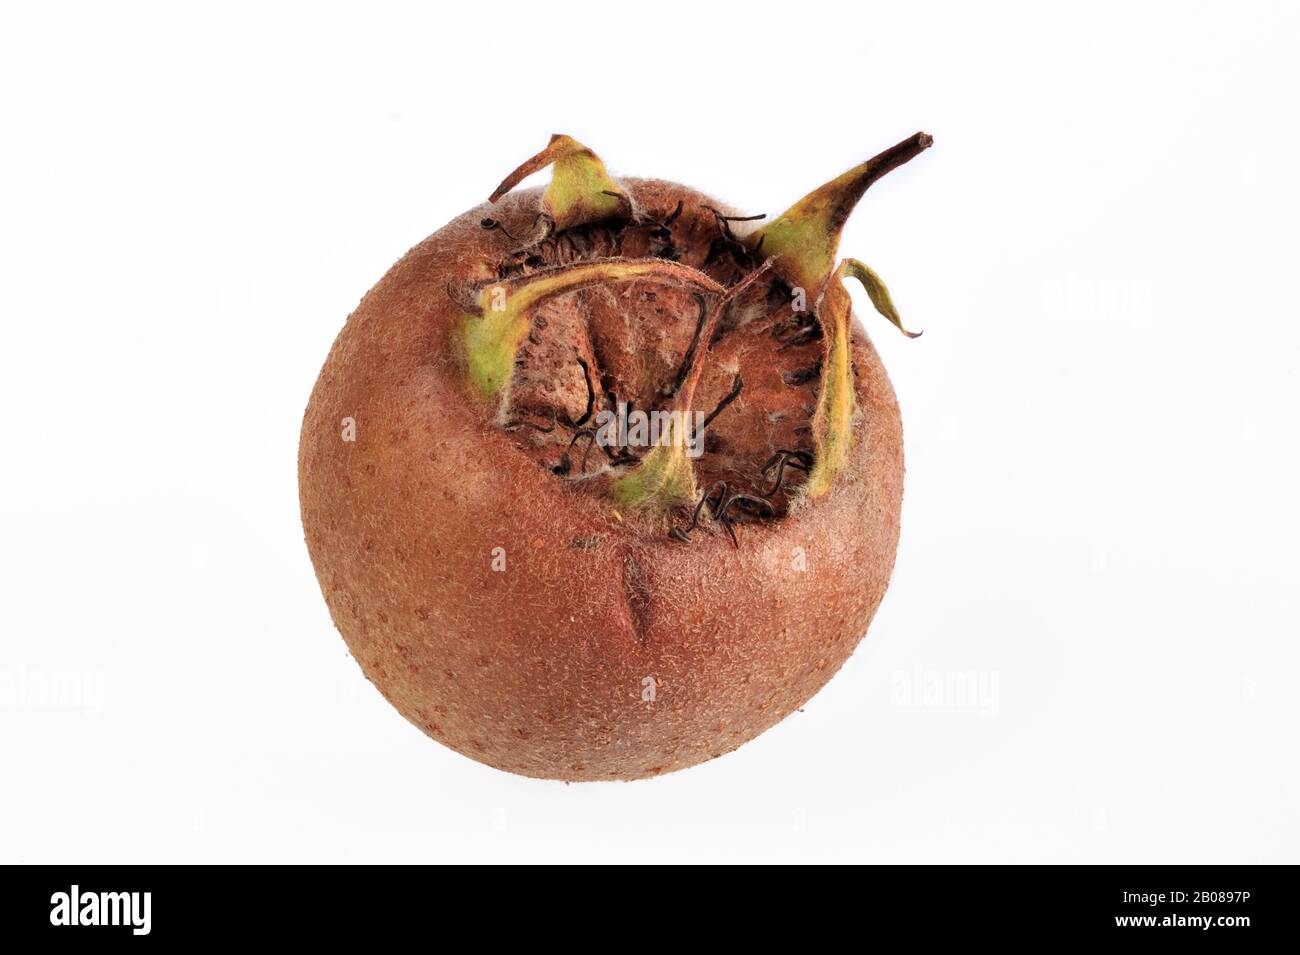 Common medlar (Mespilus germanica) showing fruit / pomes against white background Stock Photo